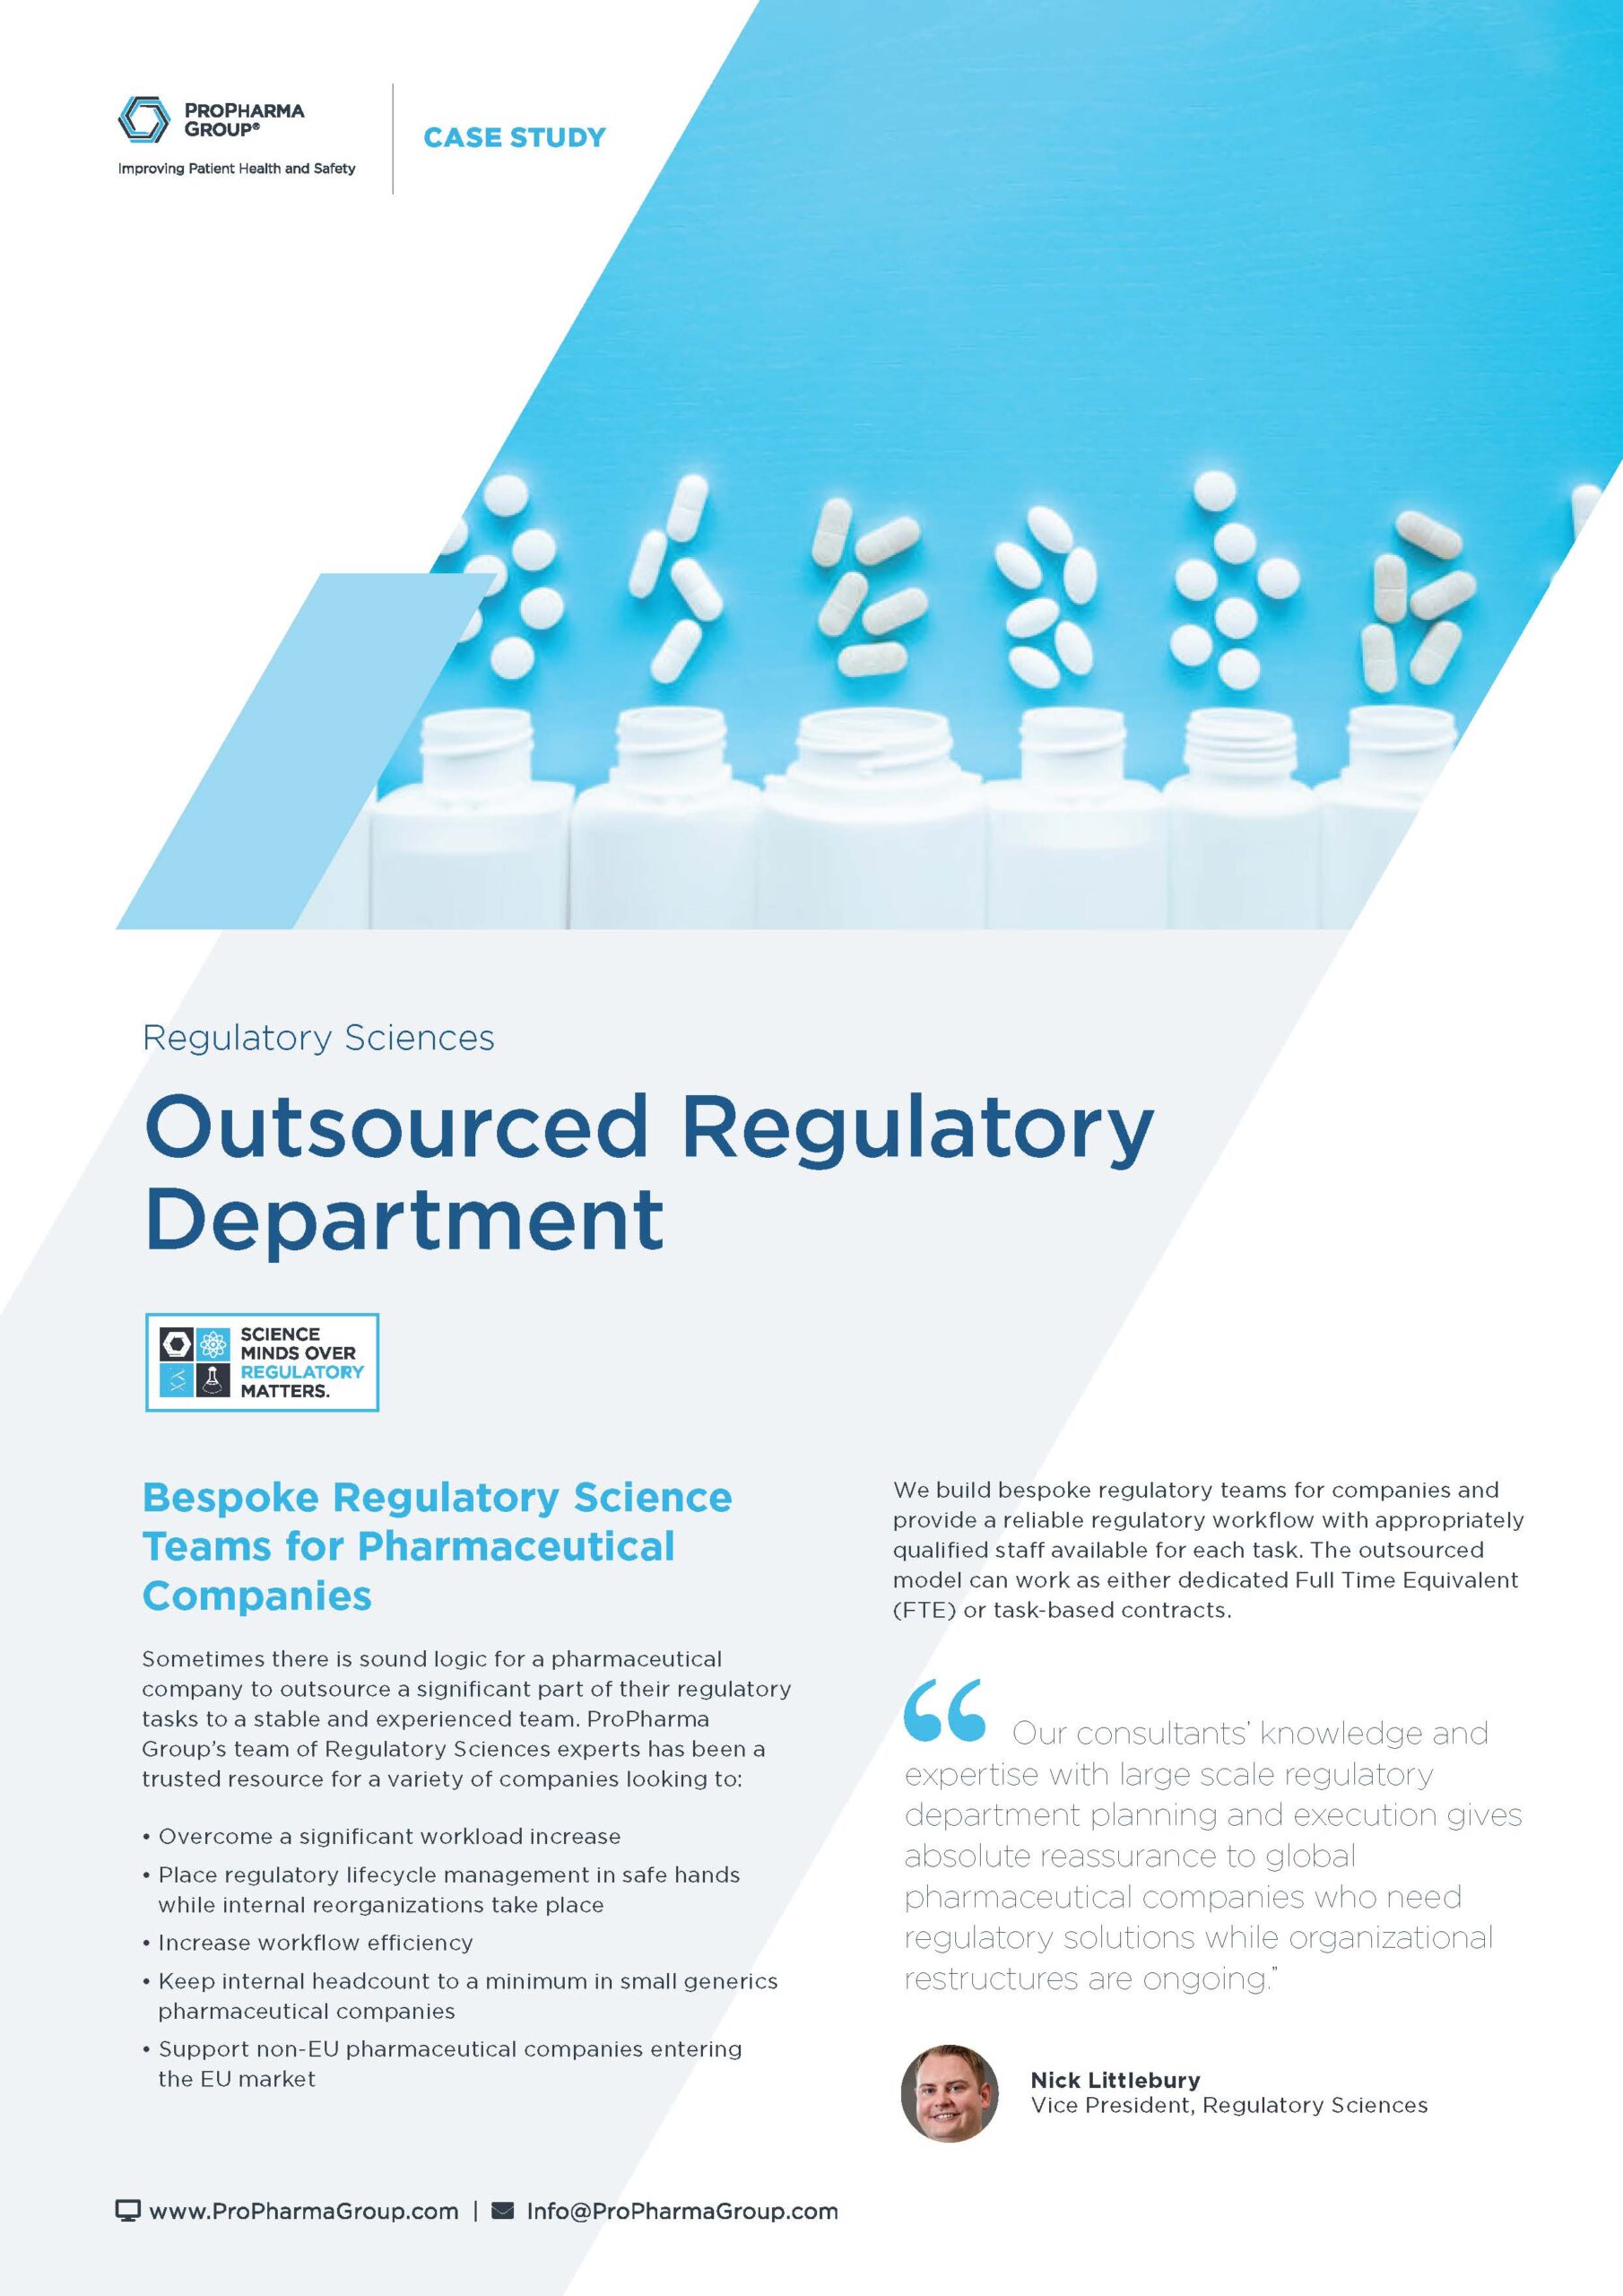 Bespoke Regulatory Sciences Teams for Pharmaceutical Companies